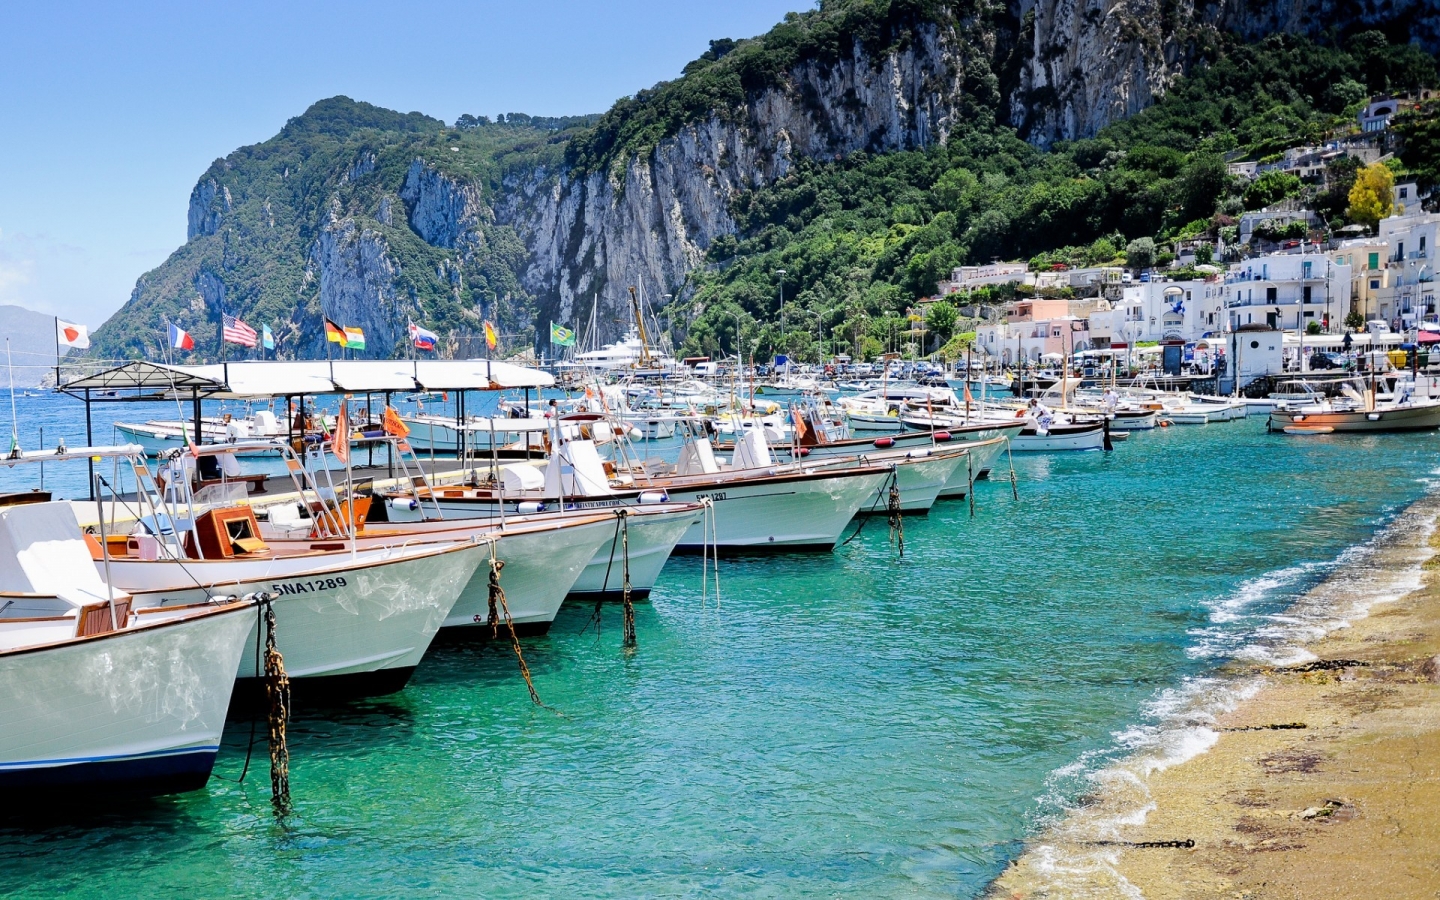 Capri Port View for 1440 x 900 widescreen resolution